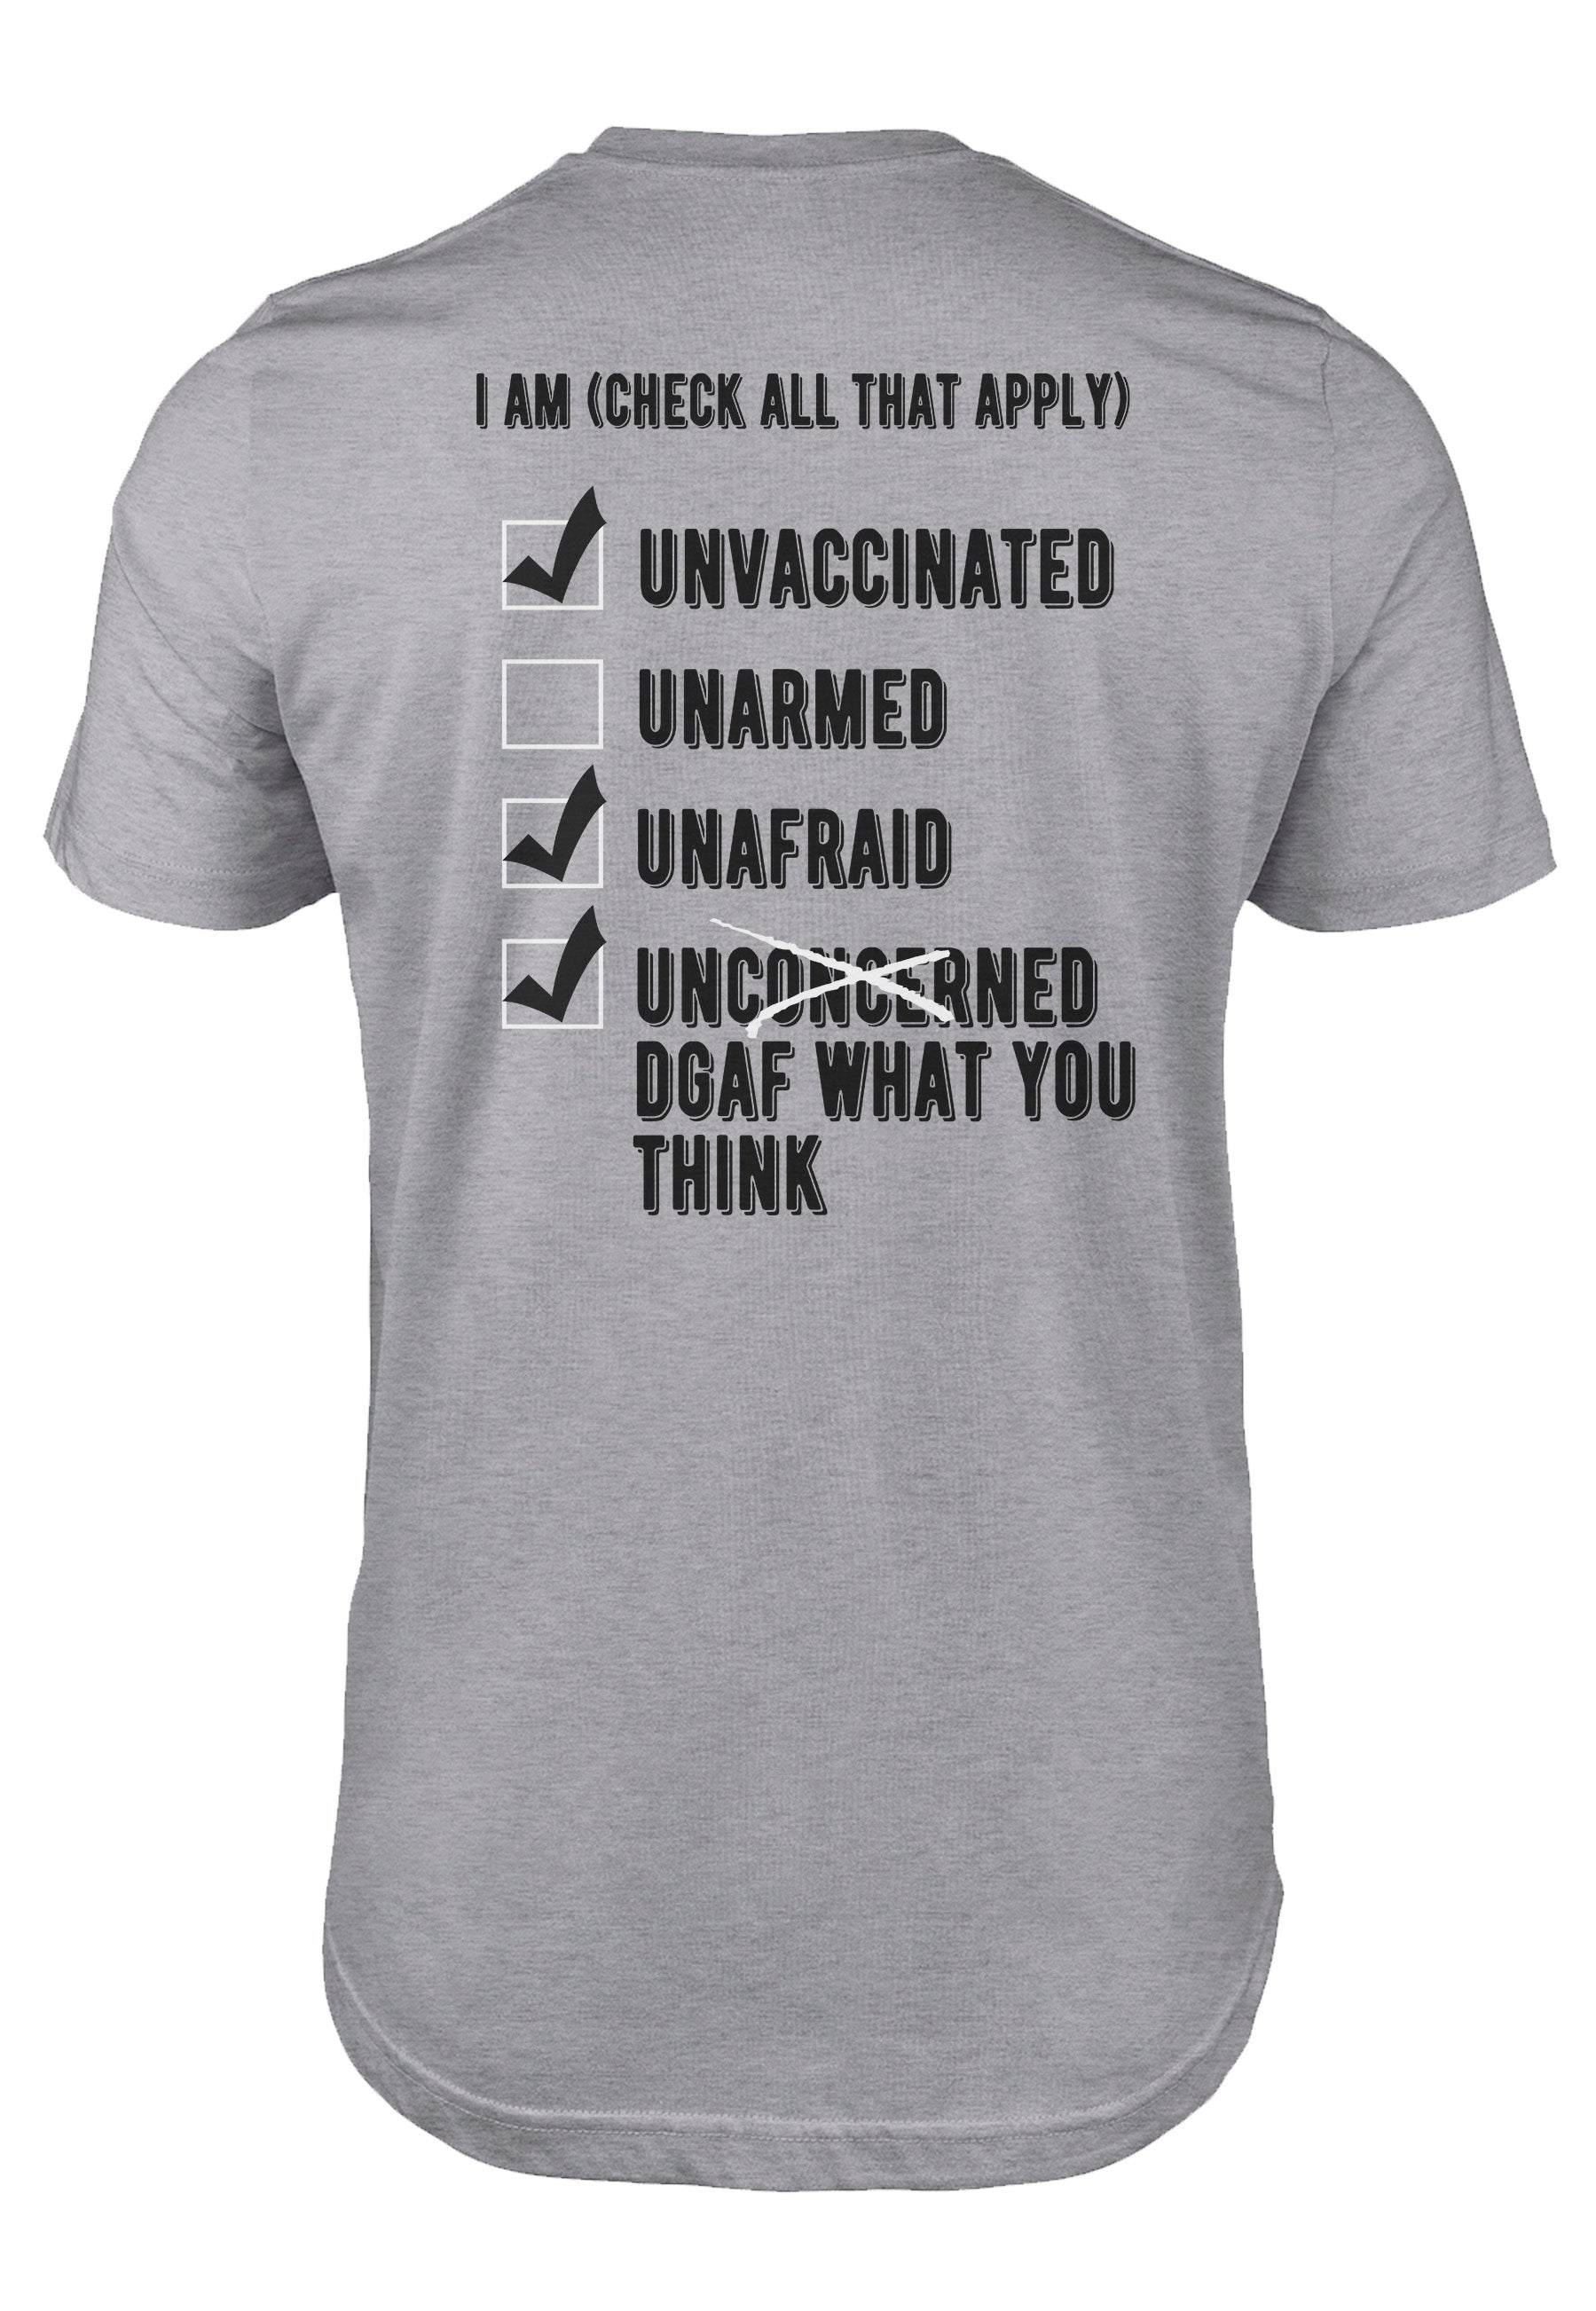 Unvaxxed and Unafraid t-shirt print on back of shirt